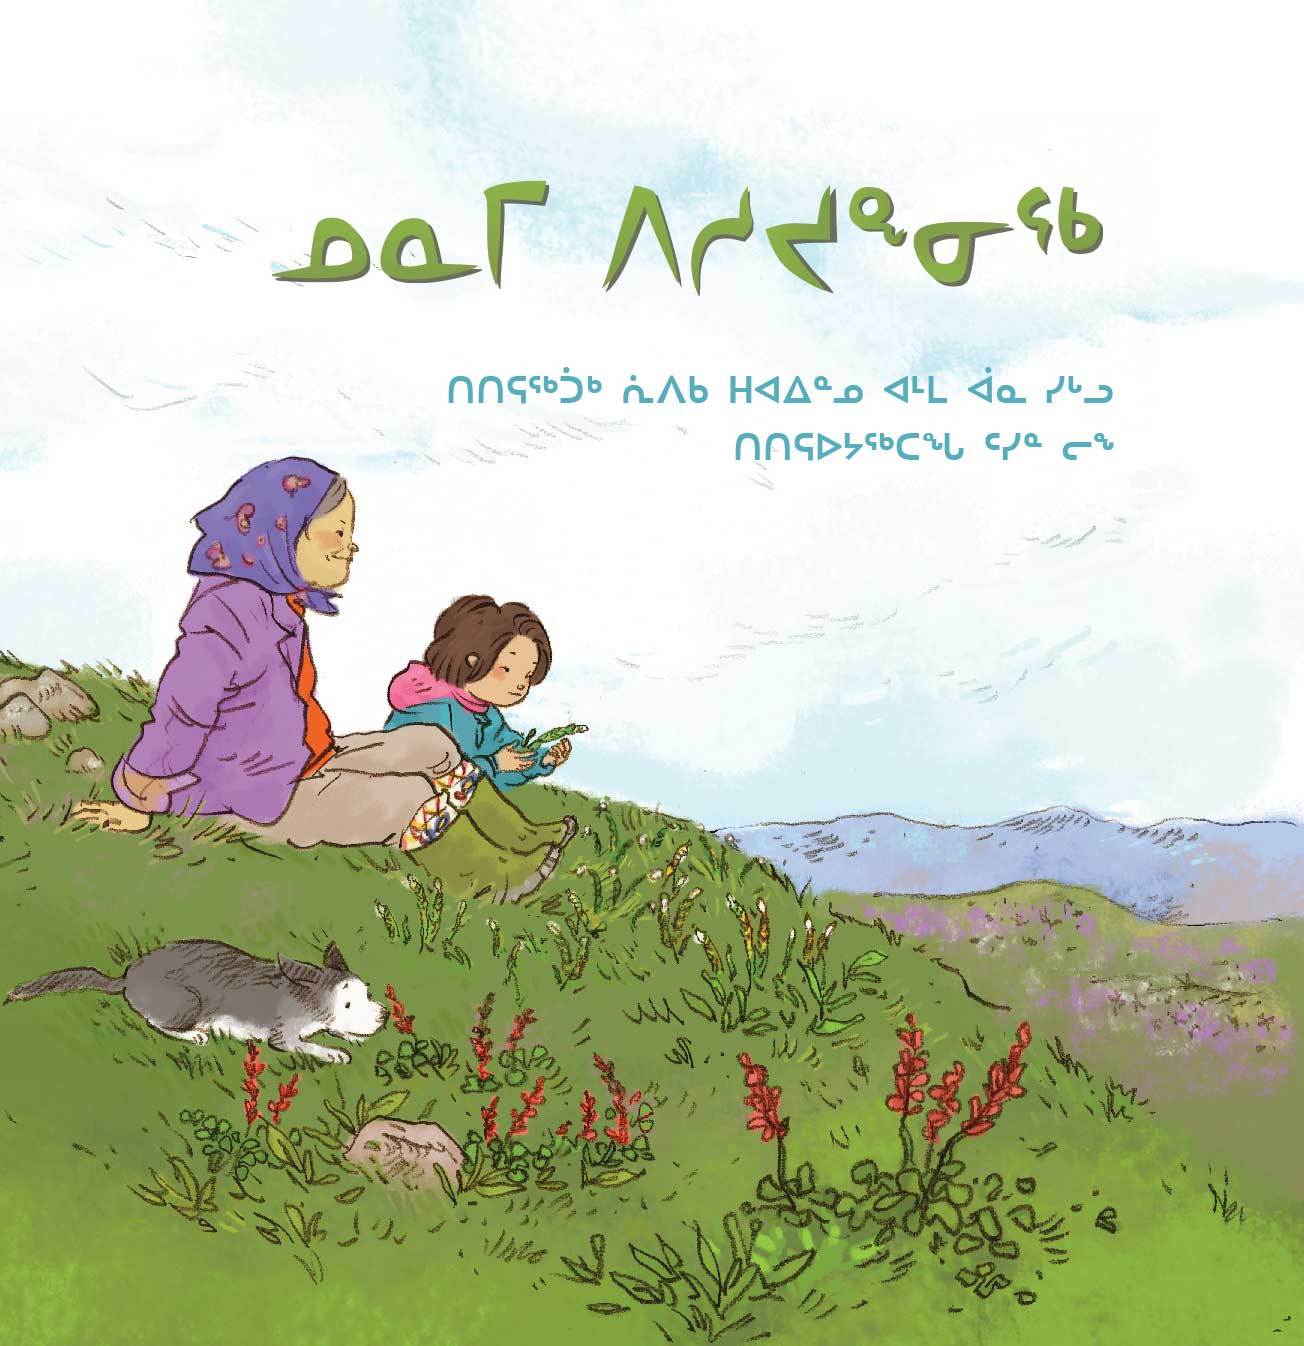 Free Inuktut Books for Inuit Families - Qikiqtani Inuit Association